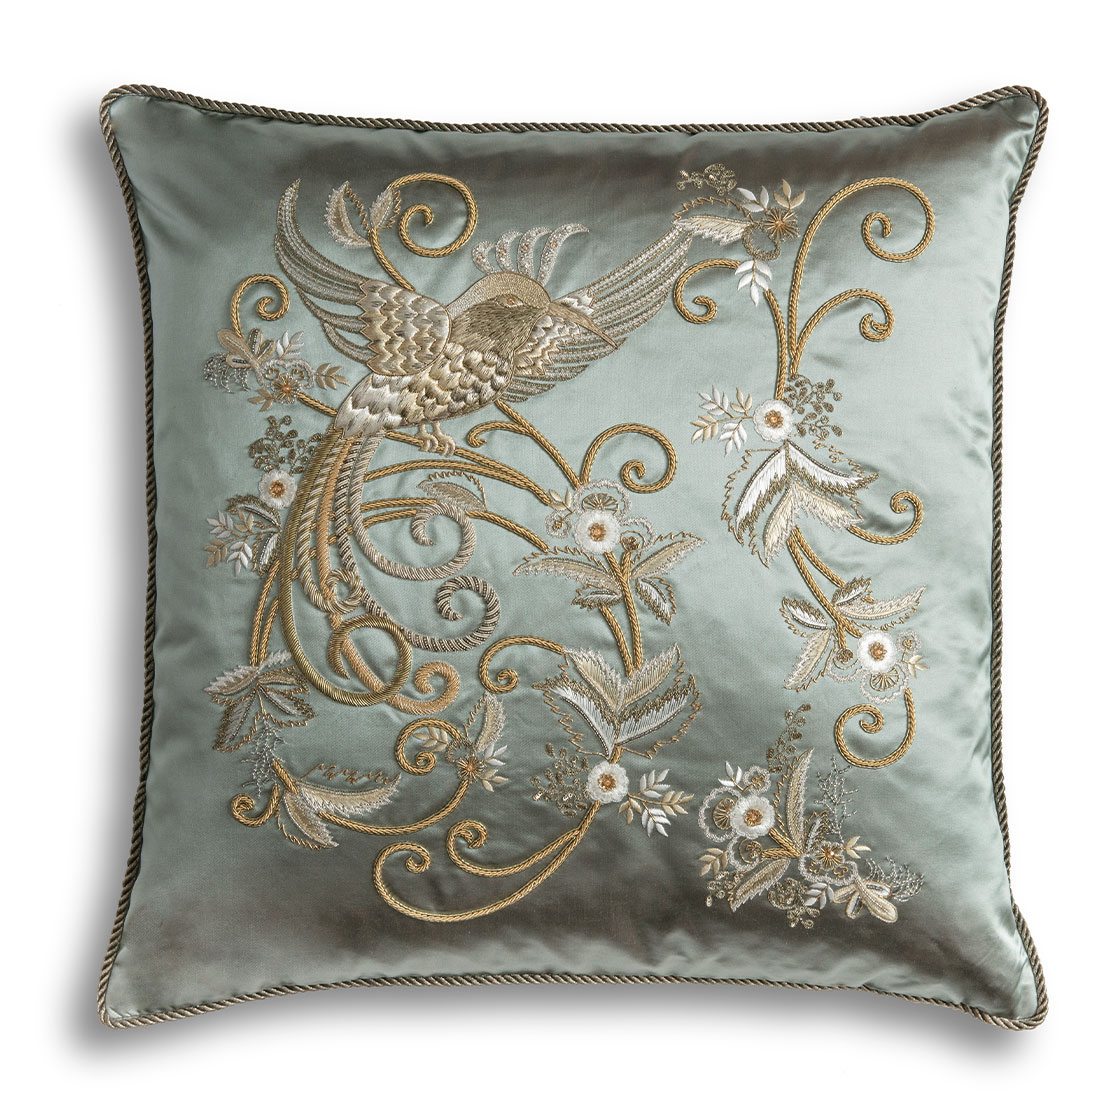 Papageno cushion in Foyle silk - Scottish isle - Beaumont & Fletcher